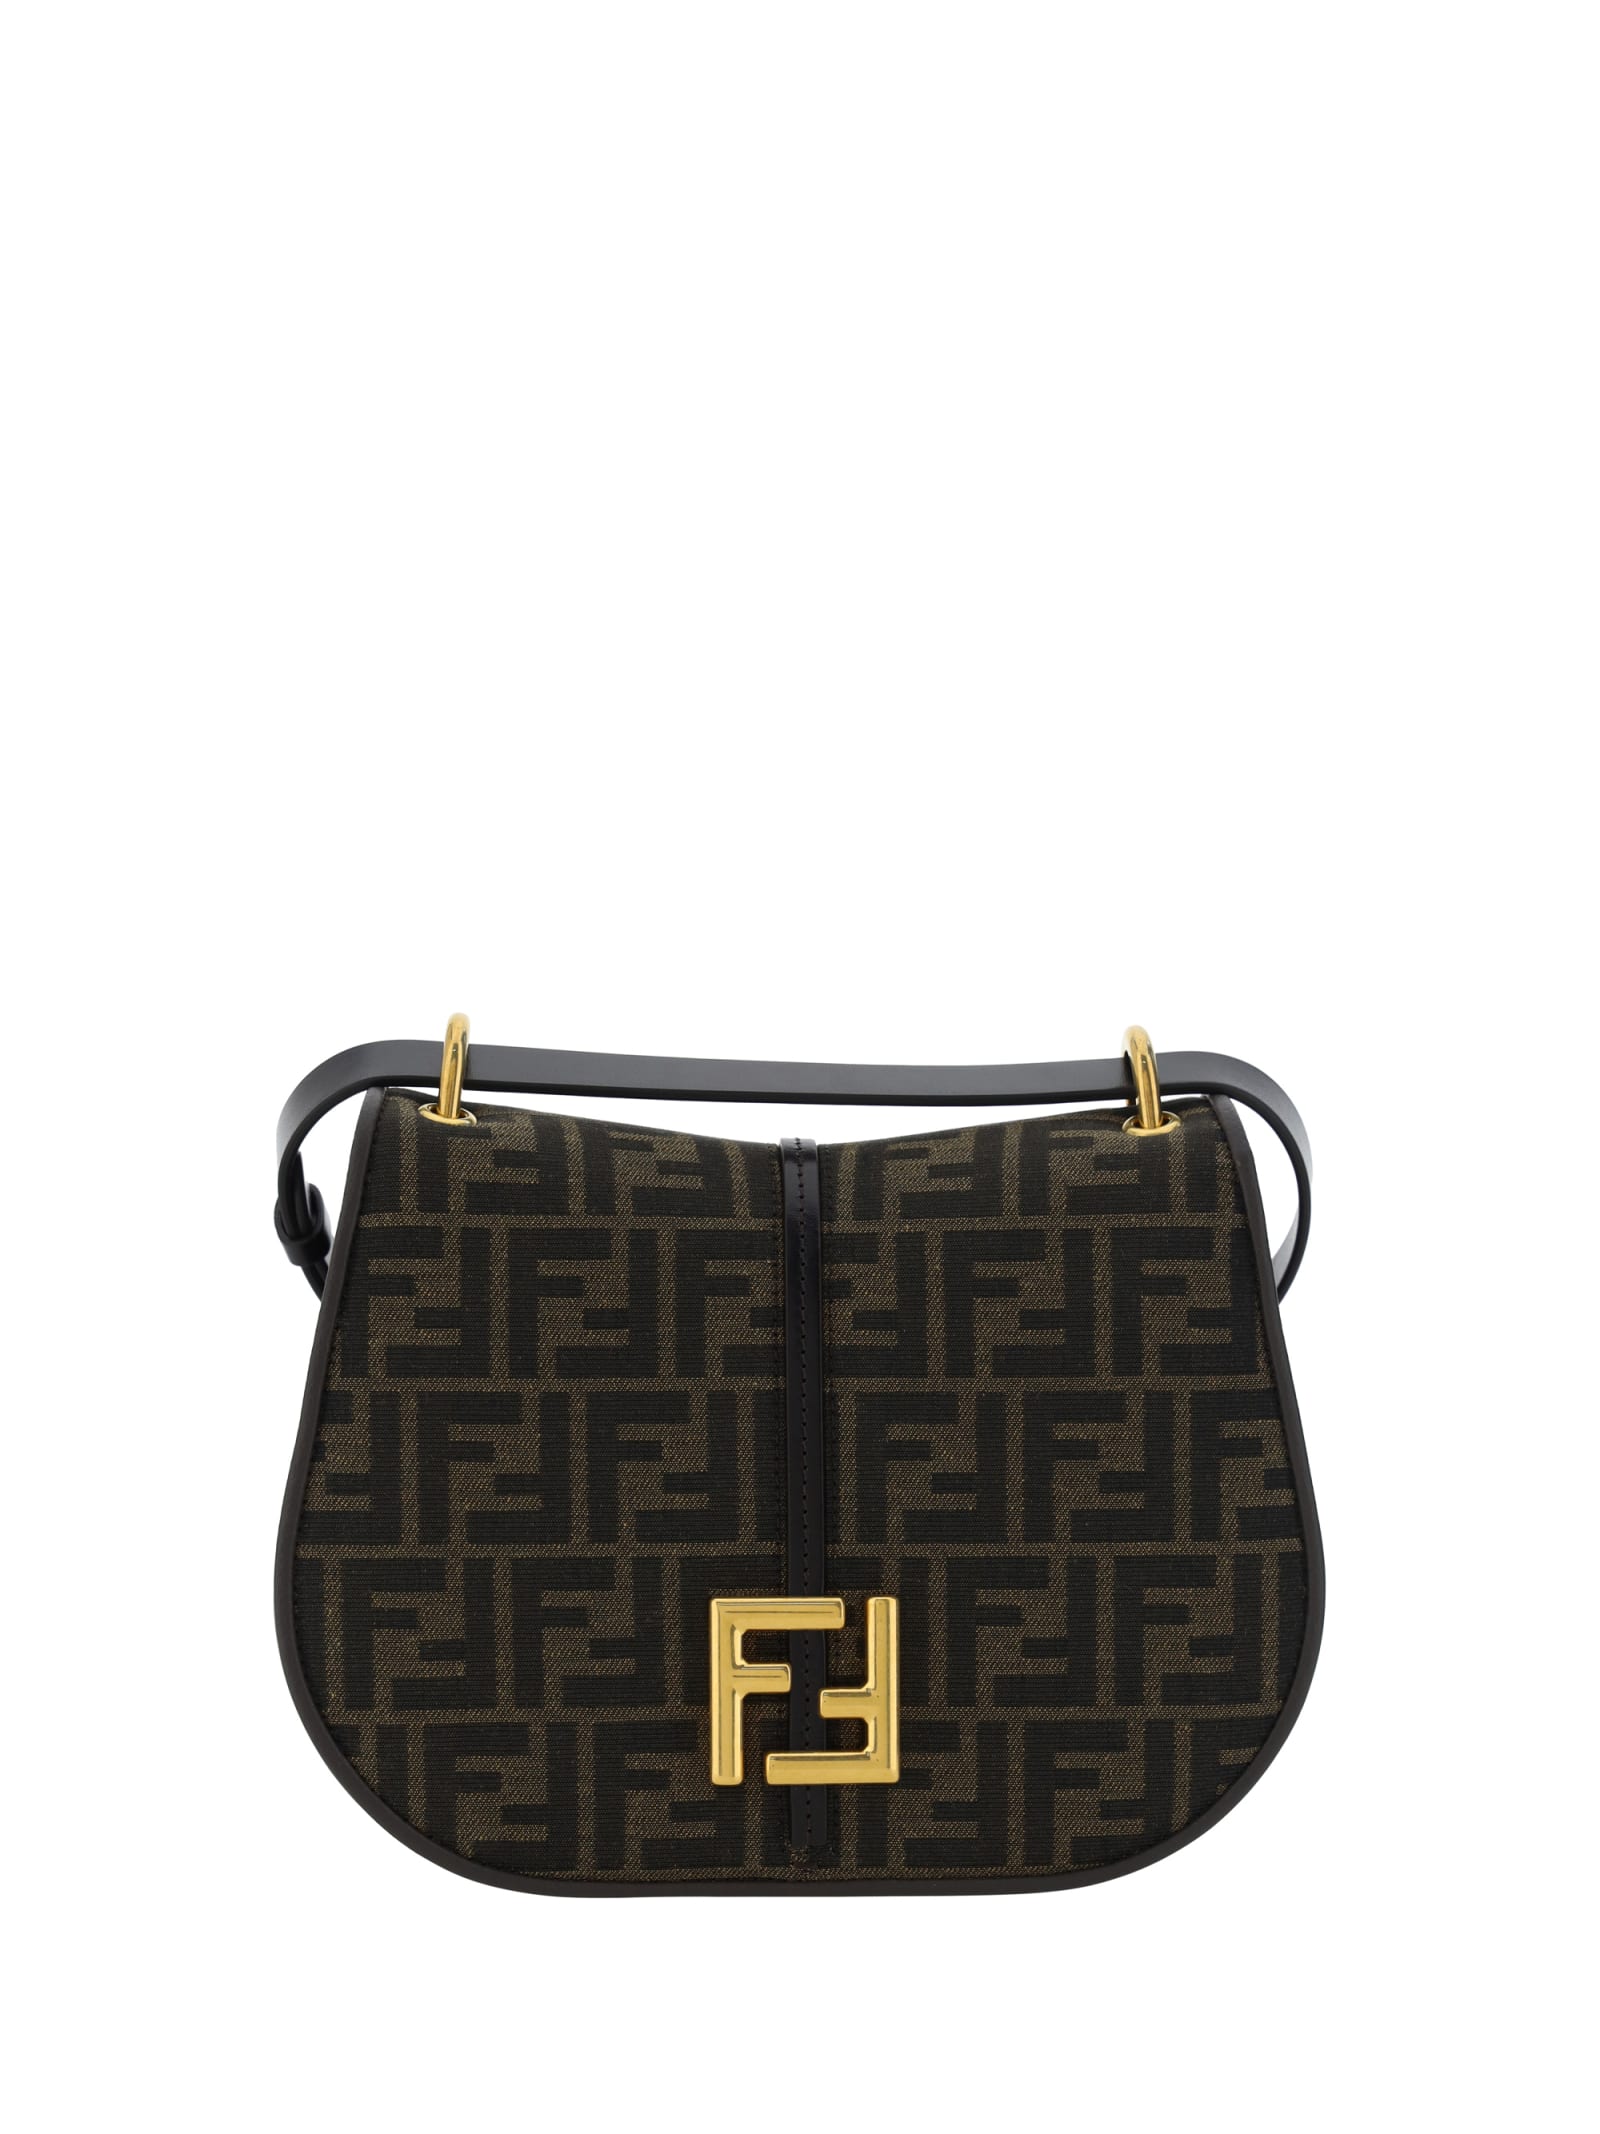 Fendi Cmon Ff Jacquard Medium Shoulder Bag